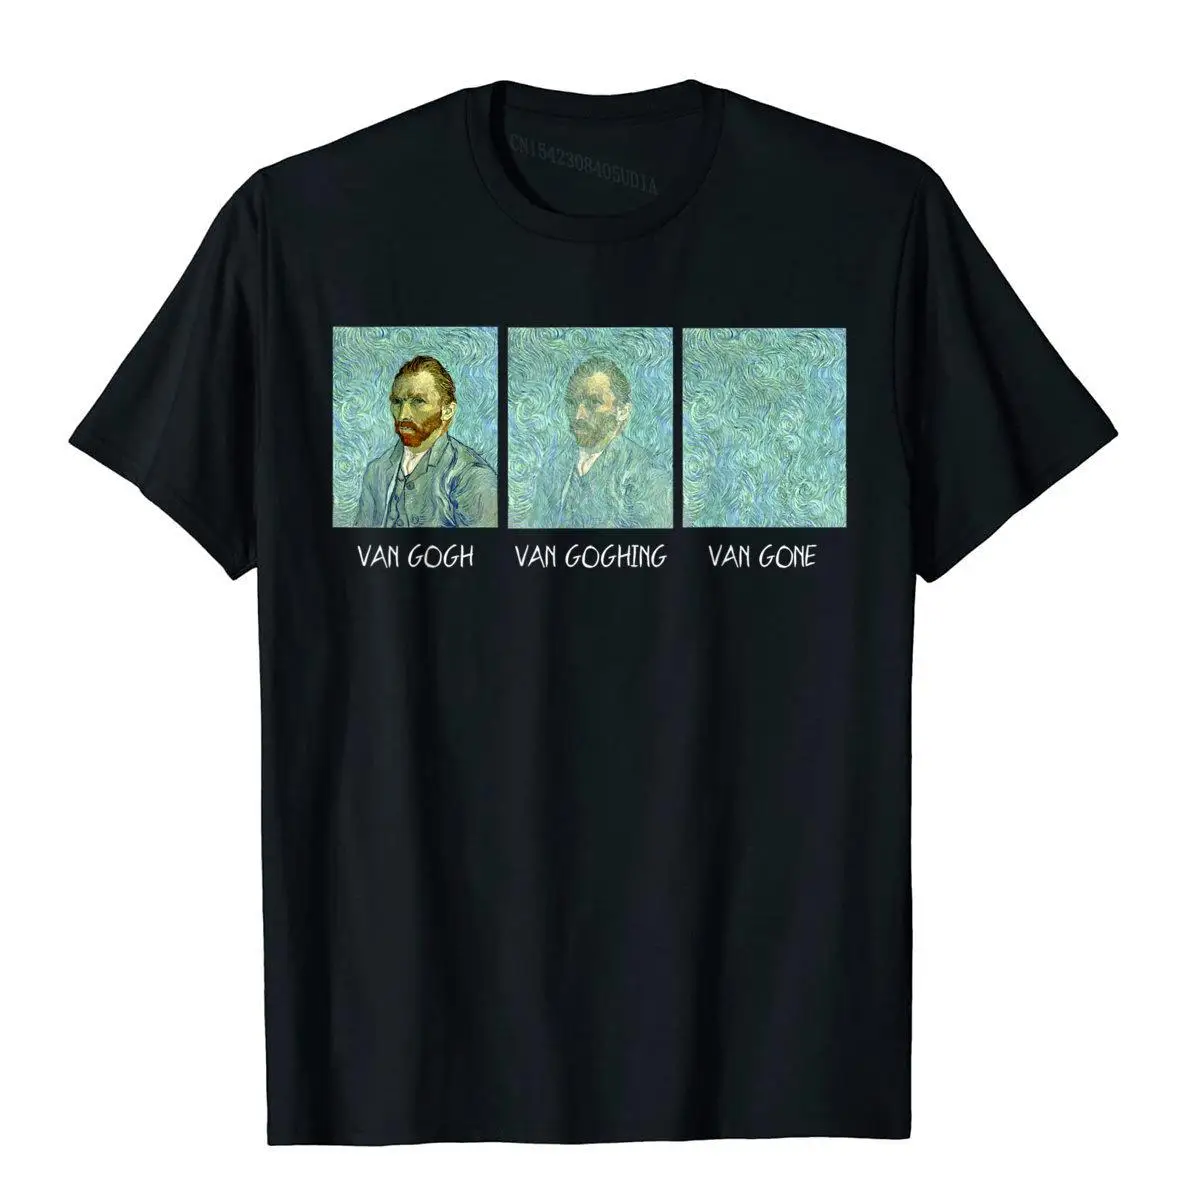 Van Gogh Van Goghing Van Gone Funny T-Shirt Cotton Tops T Shirt For Men Funny Top T-Shirts Print Hot Sale